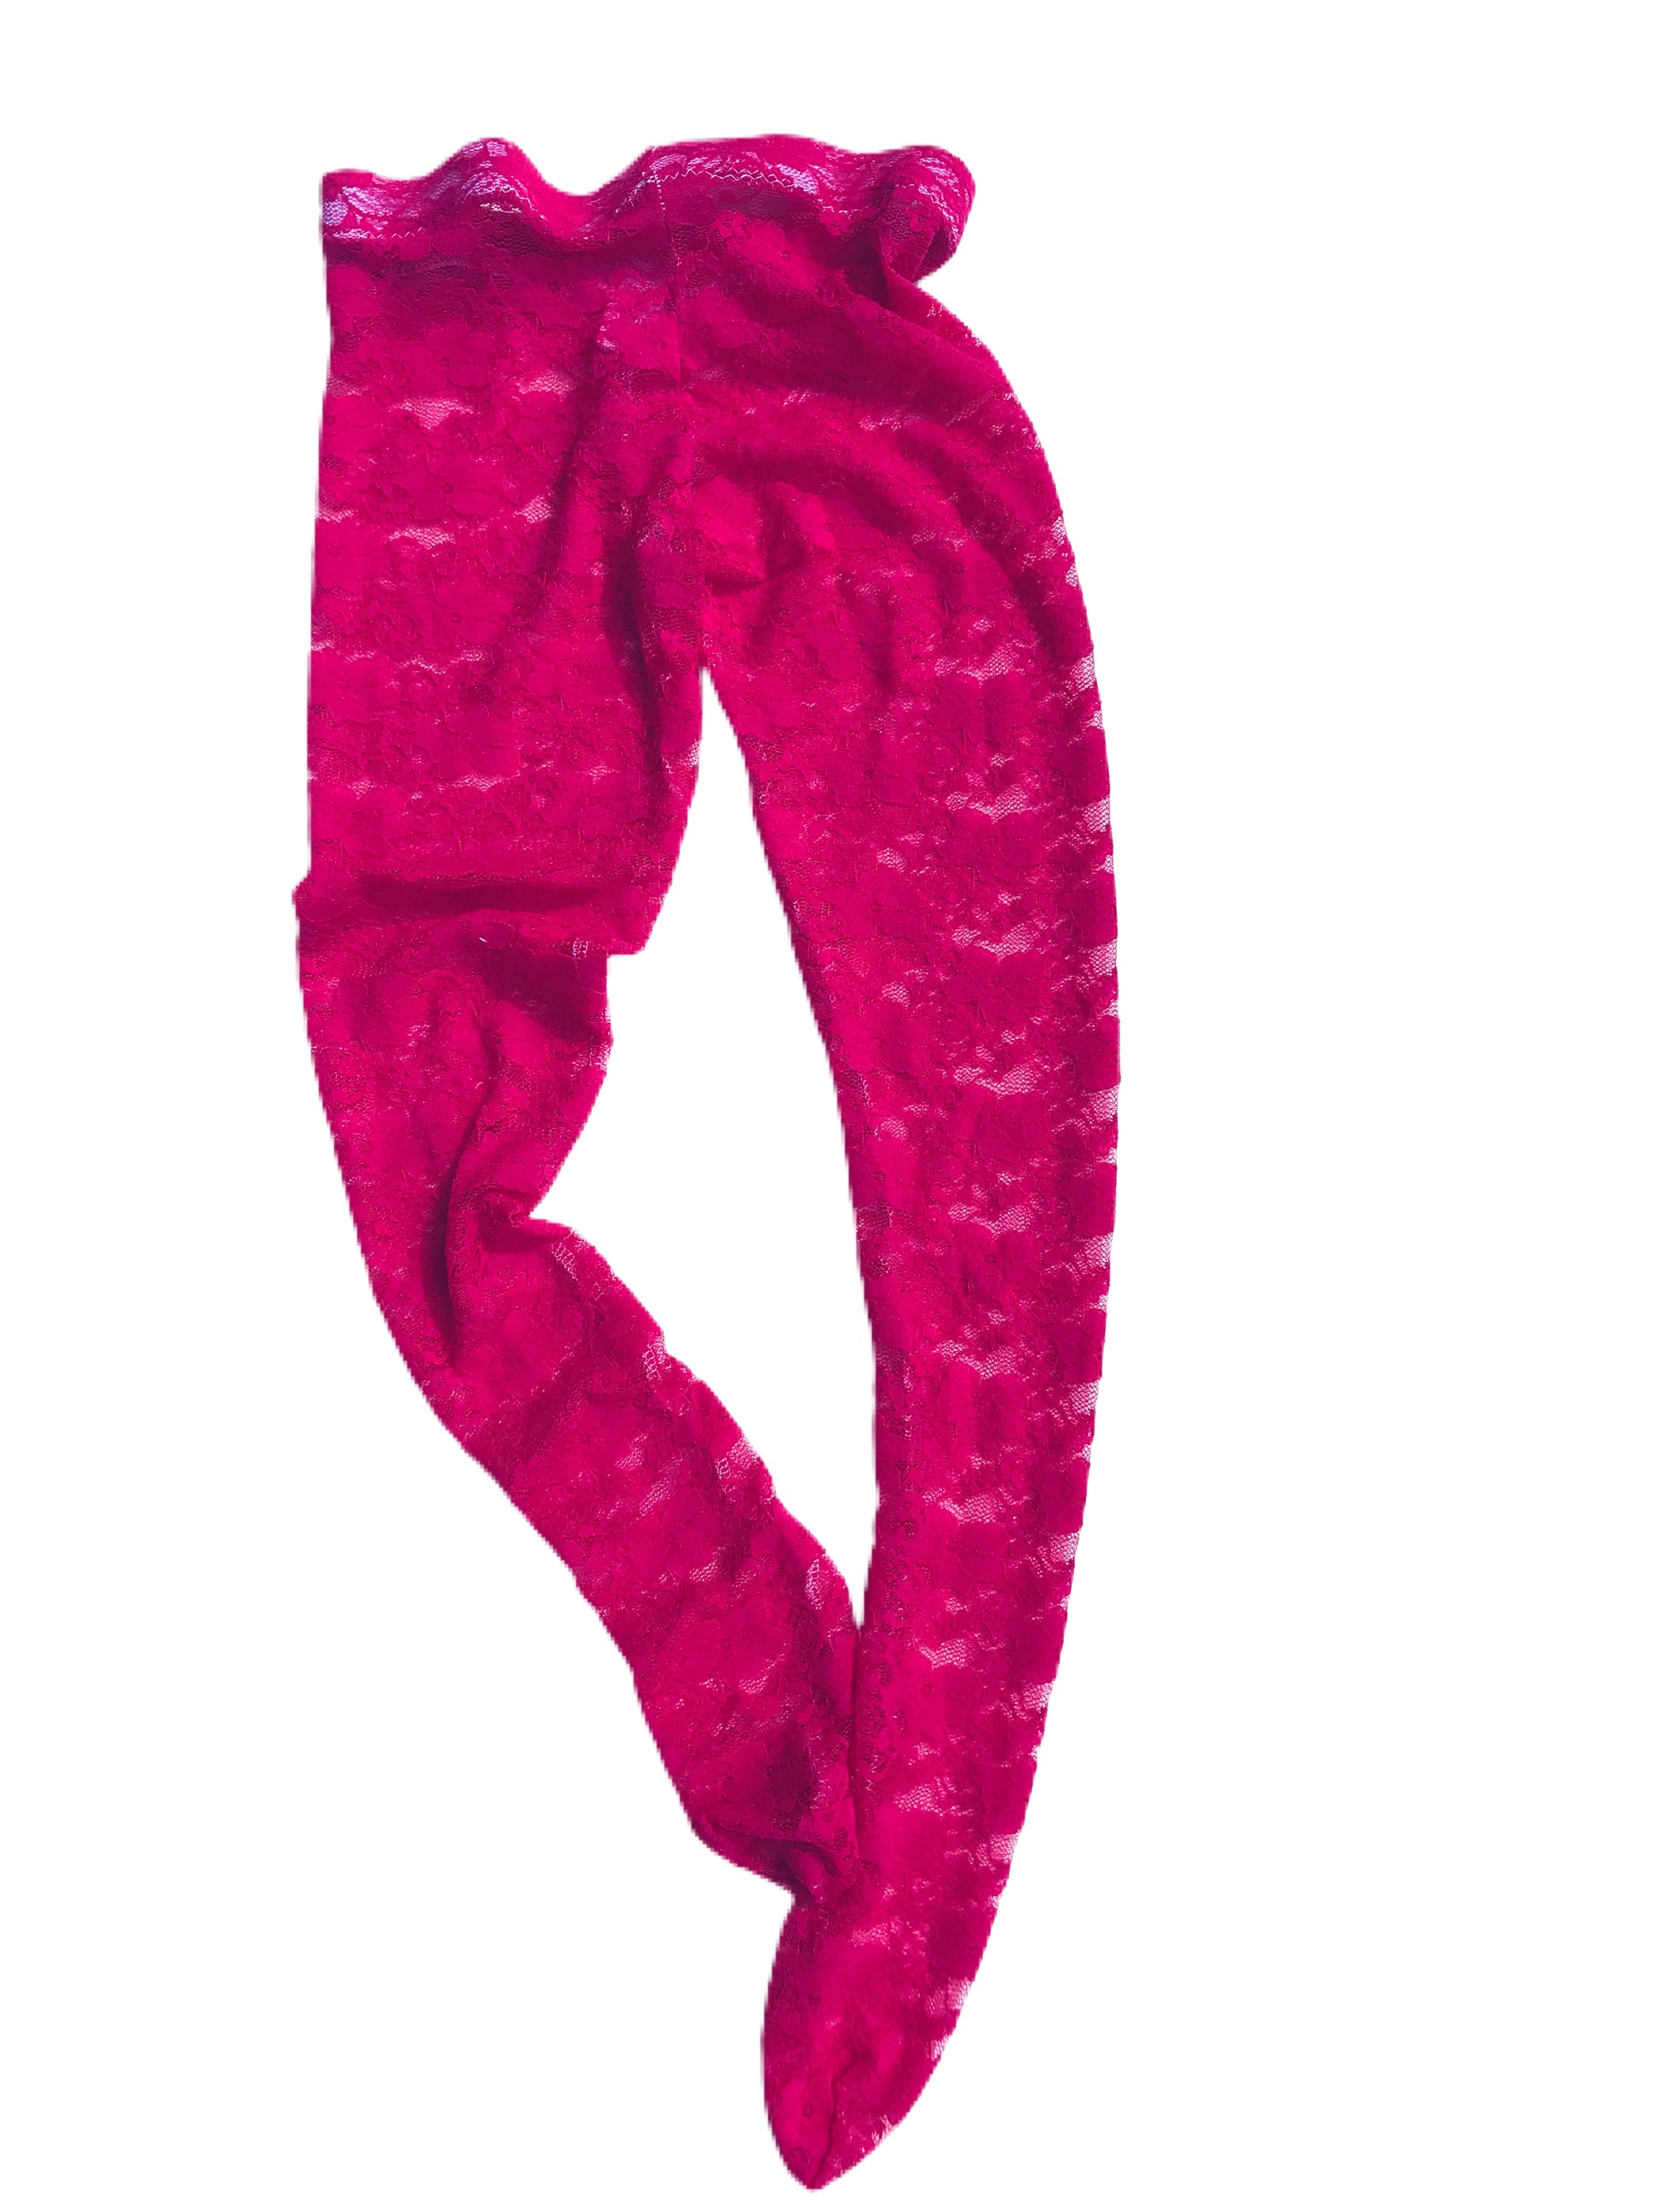 Fuchsia Lace tights, Lace Tights, Handmade tights